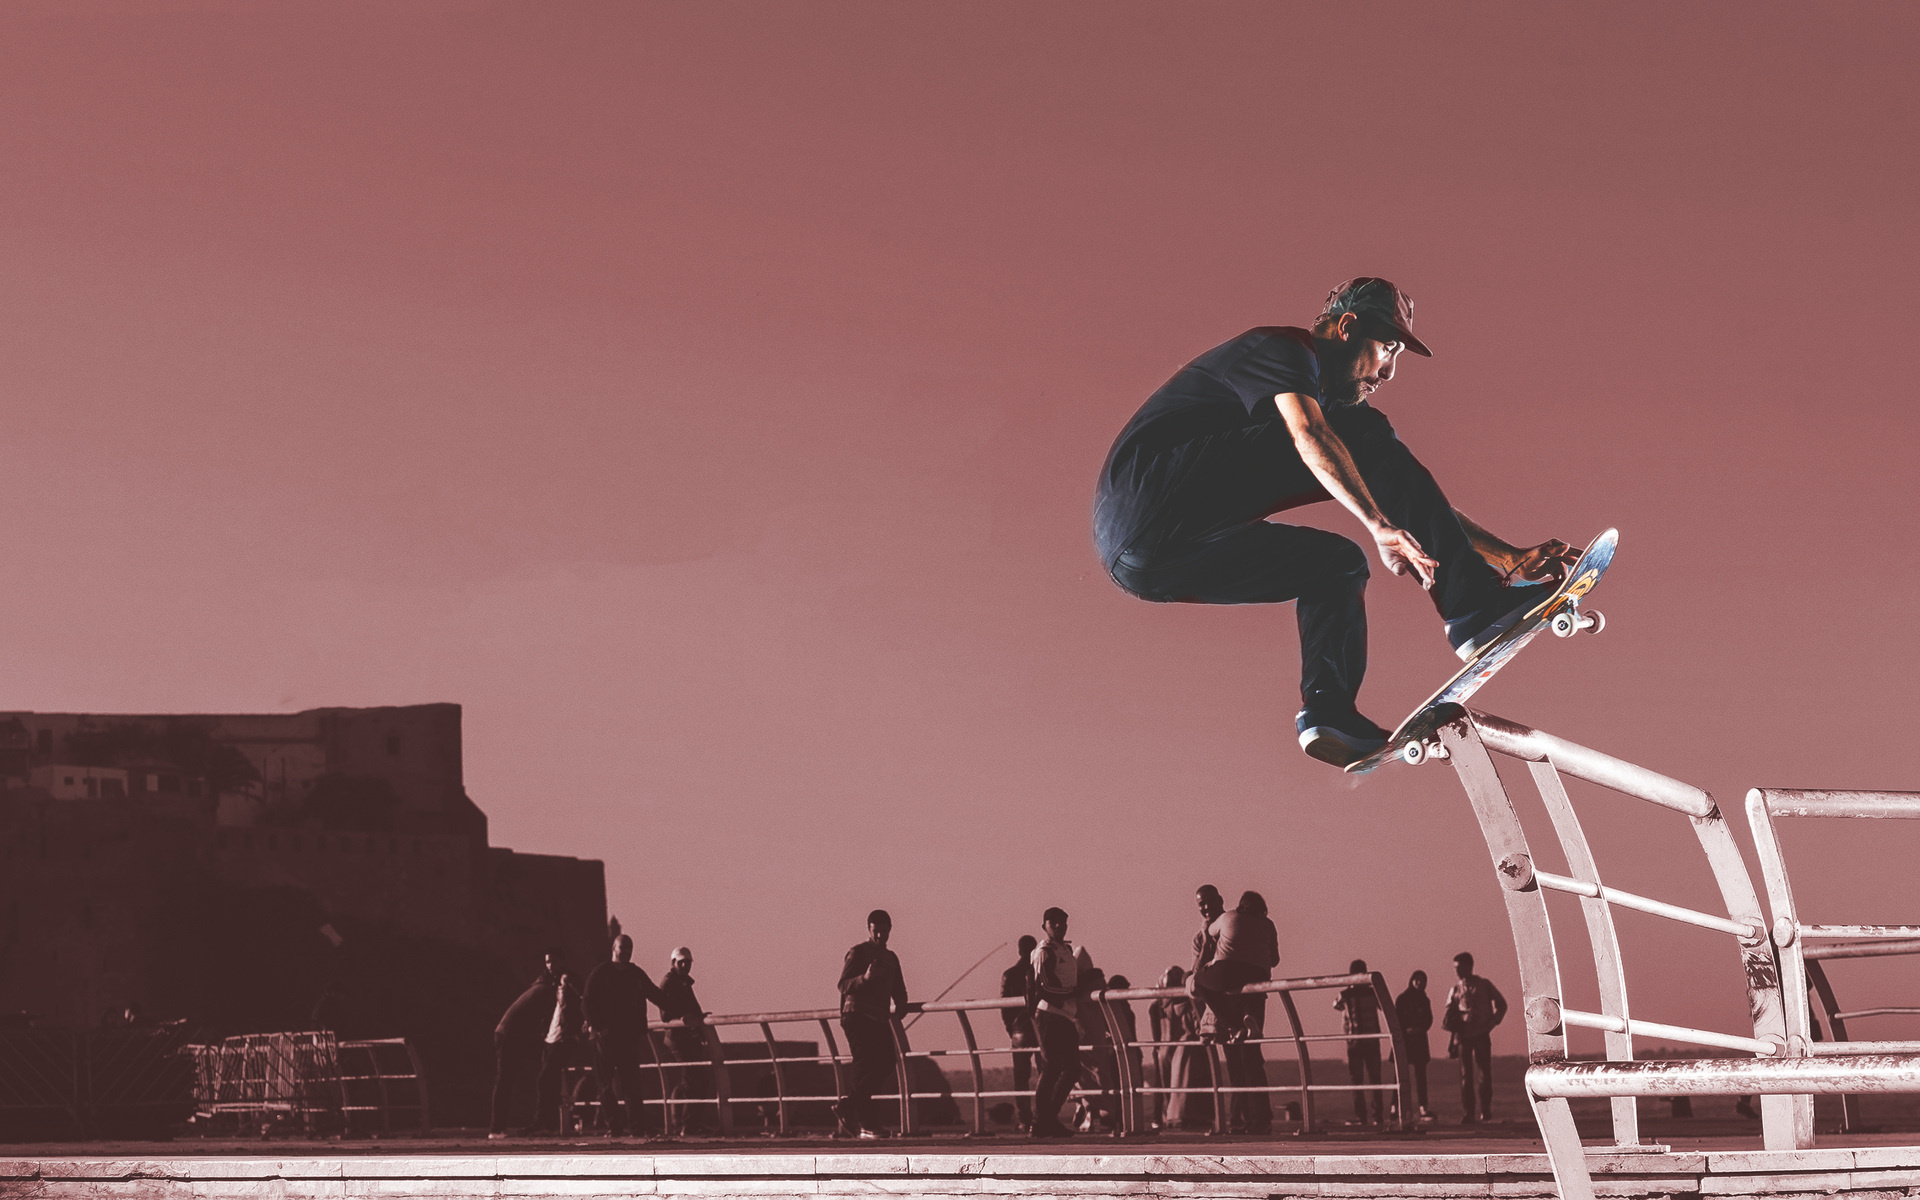 Stunt: Skateboard Stuntman, Urban sport with the elements of parkour. 1920x1200 HD Wallpaper.